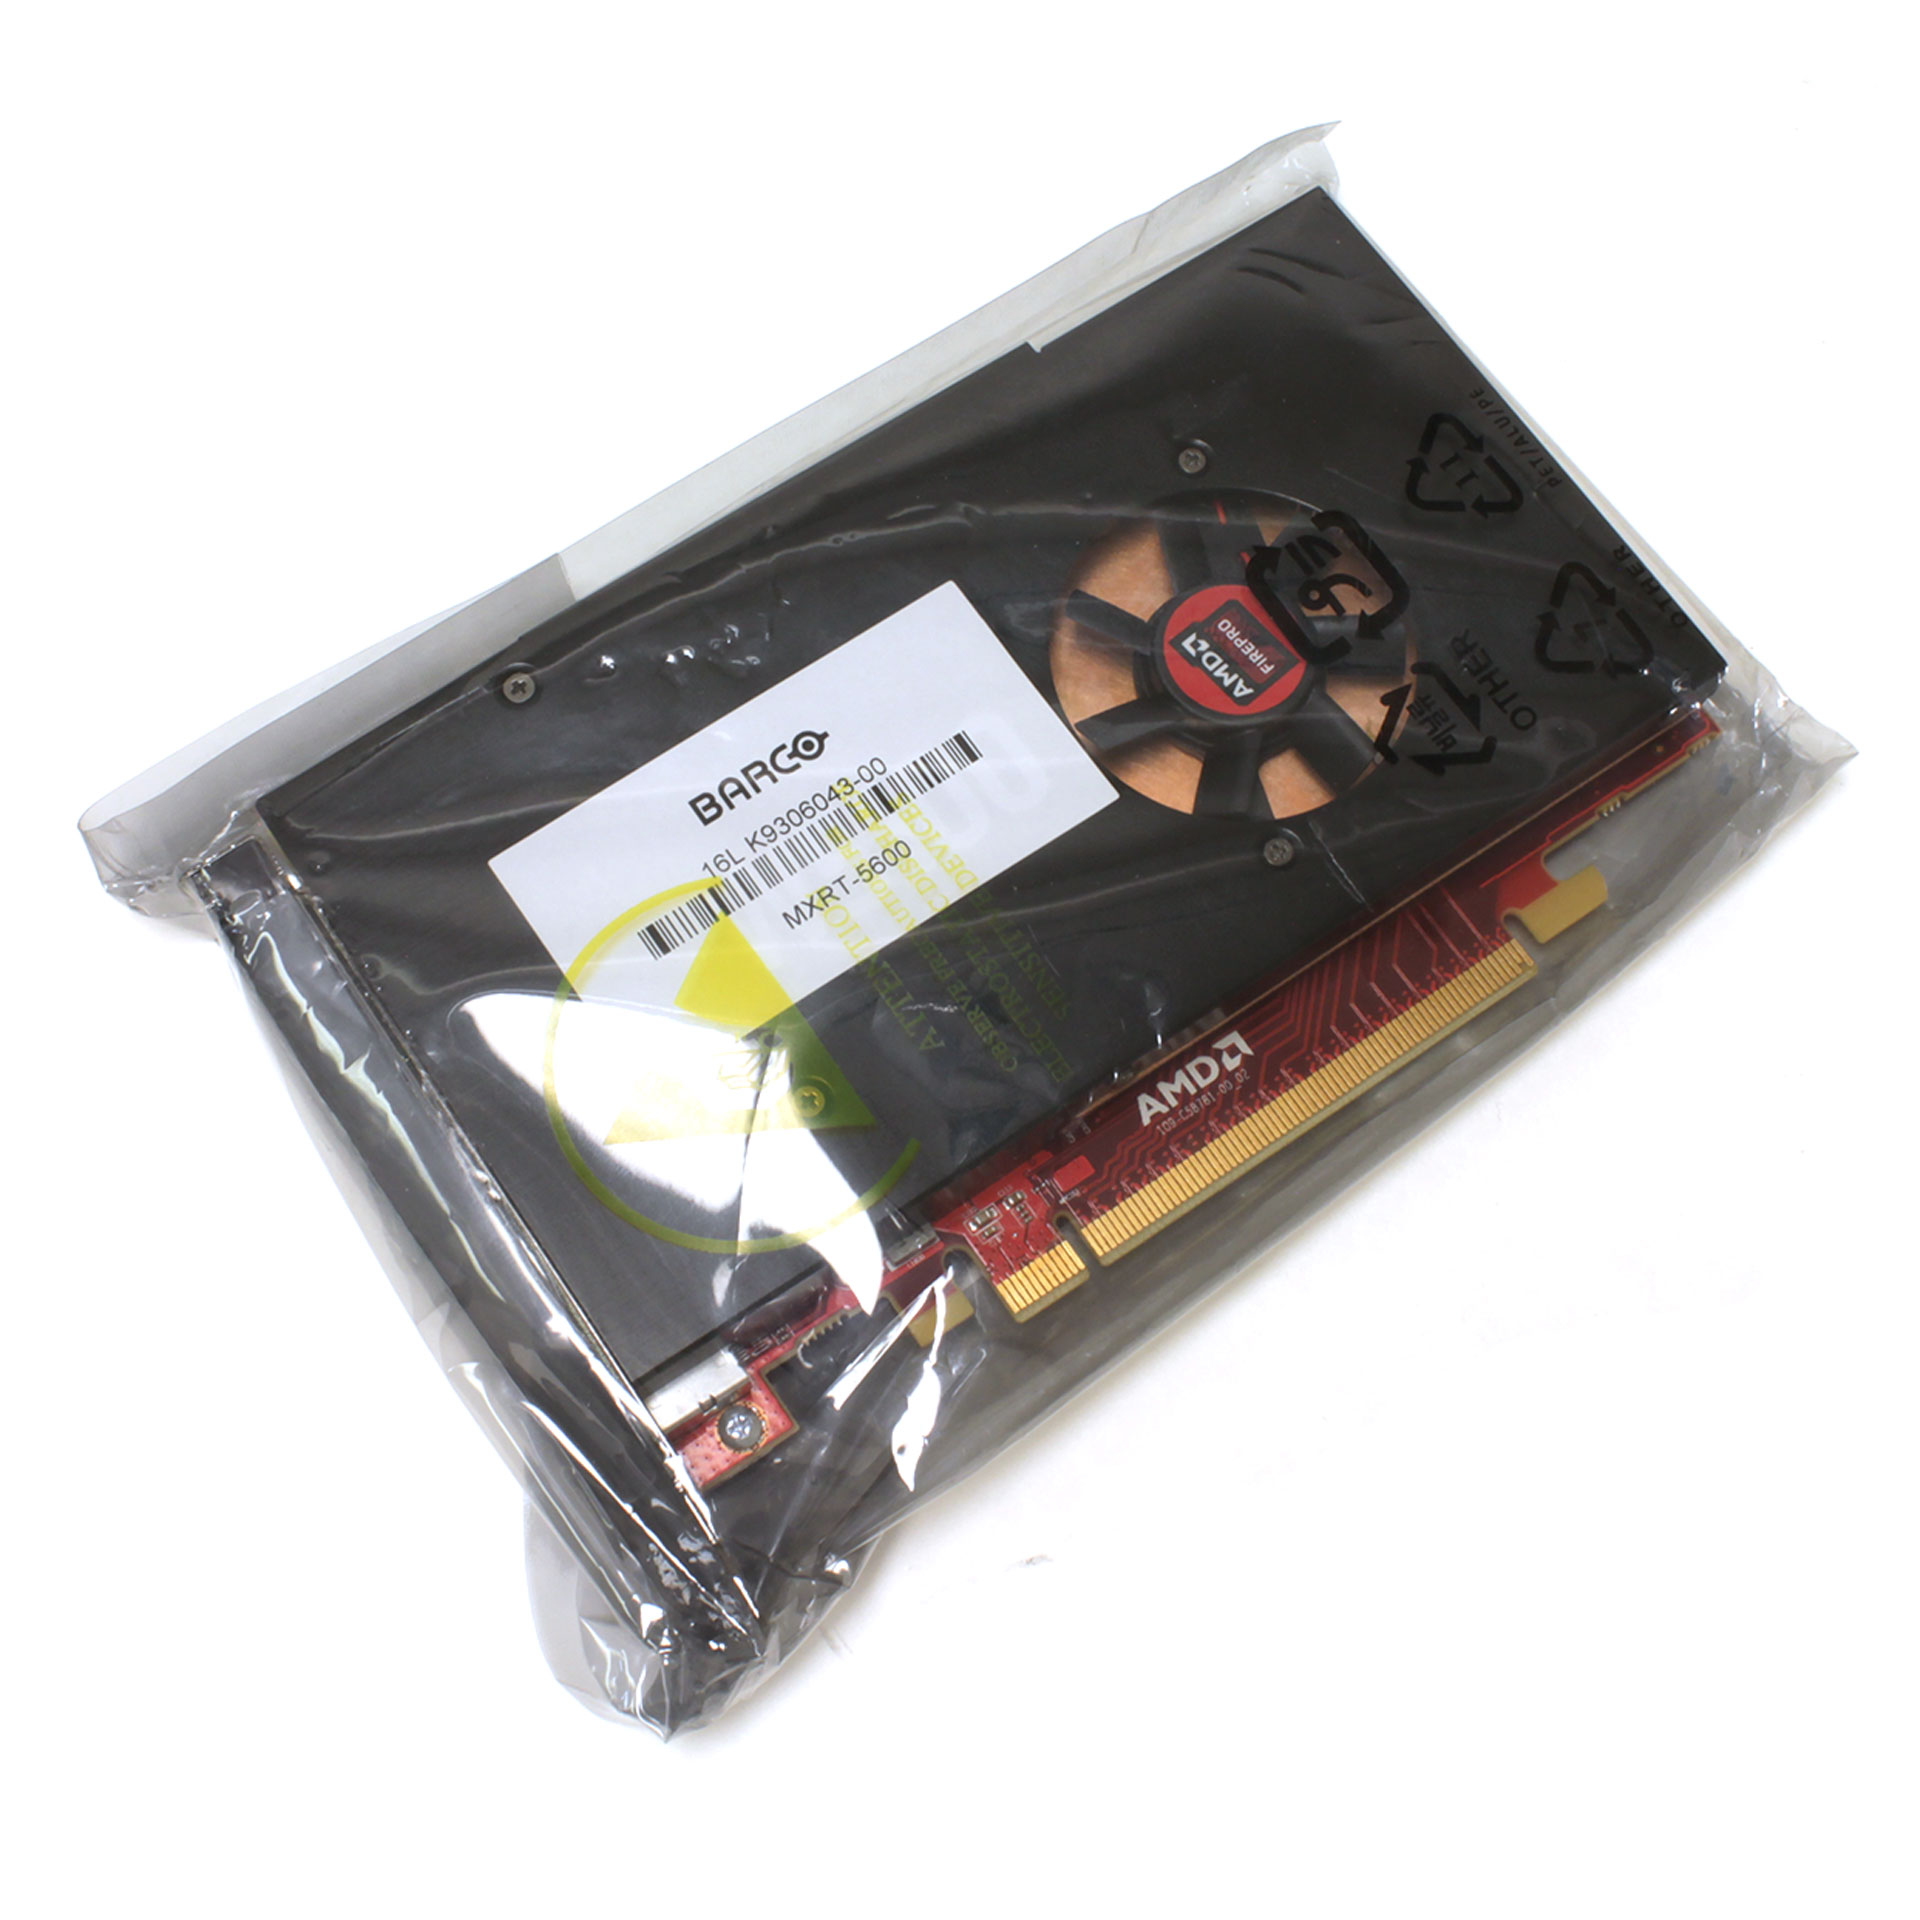 Barco MXRT-5600 4GB GDDR5 3D PCI-e x16 4-head 4X DP K9306043-00